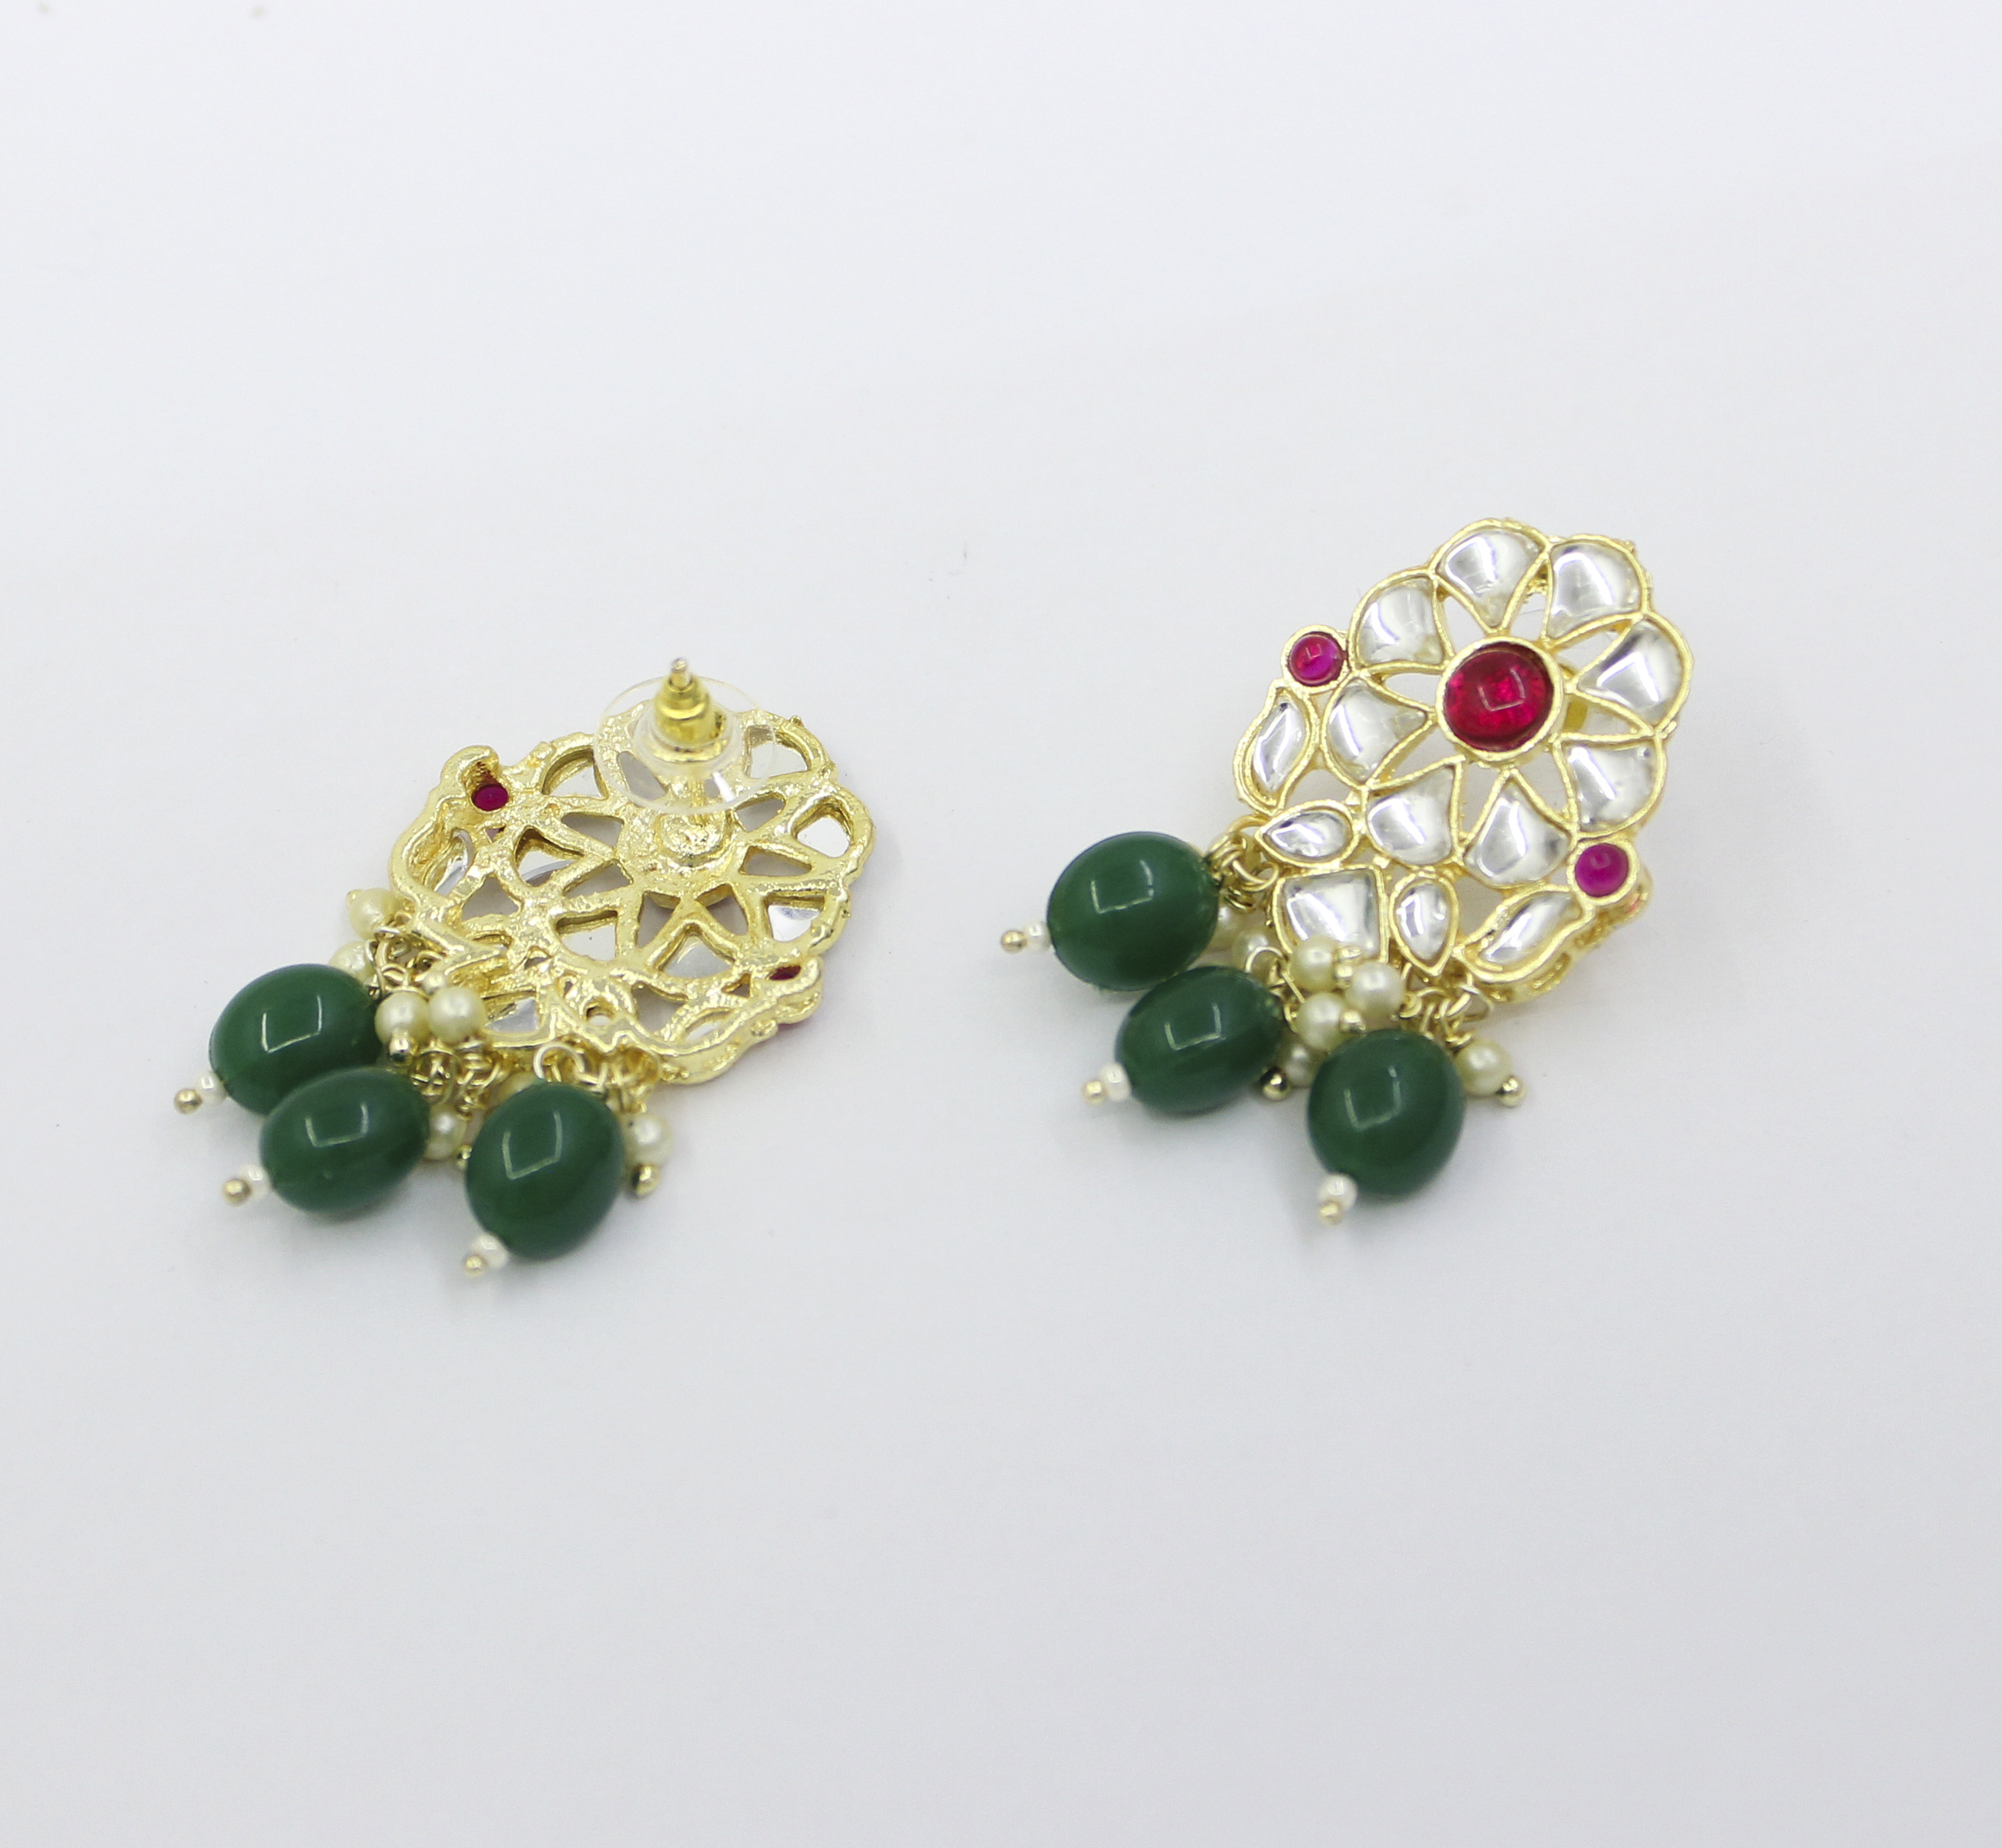 Gold Tone Kundan Pearl Choker Necklace Earring Jewellery Set